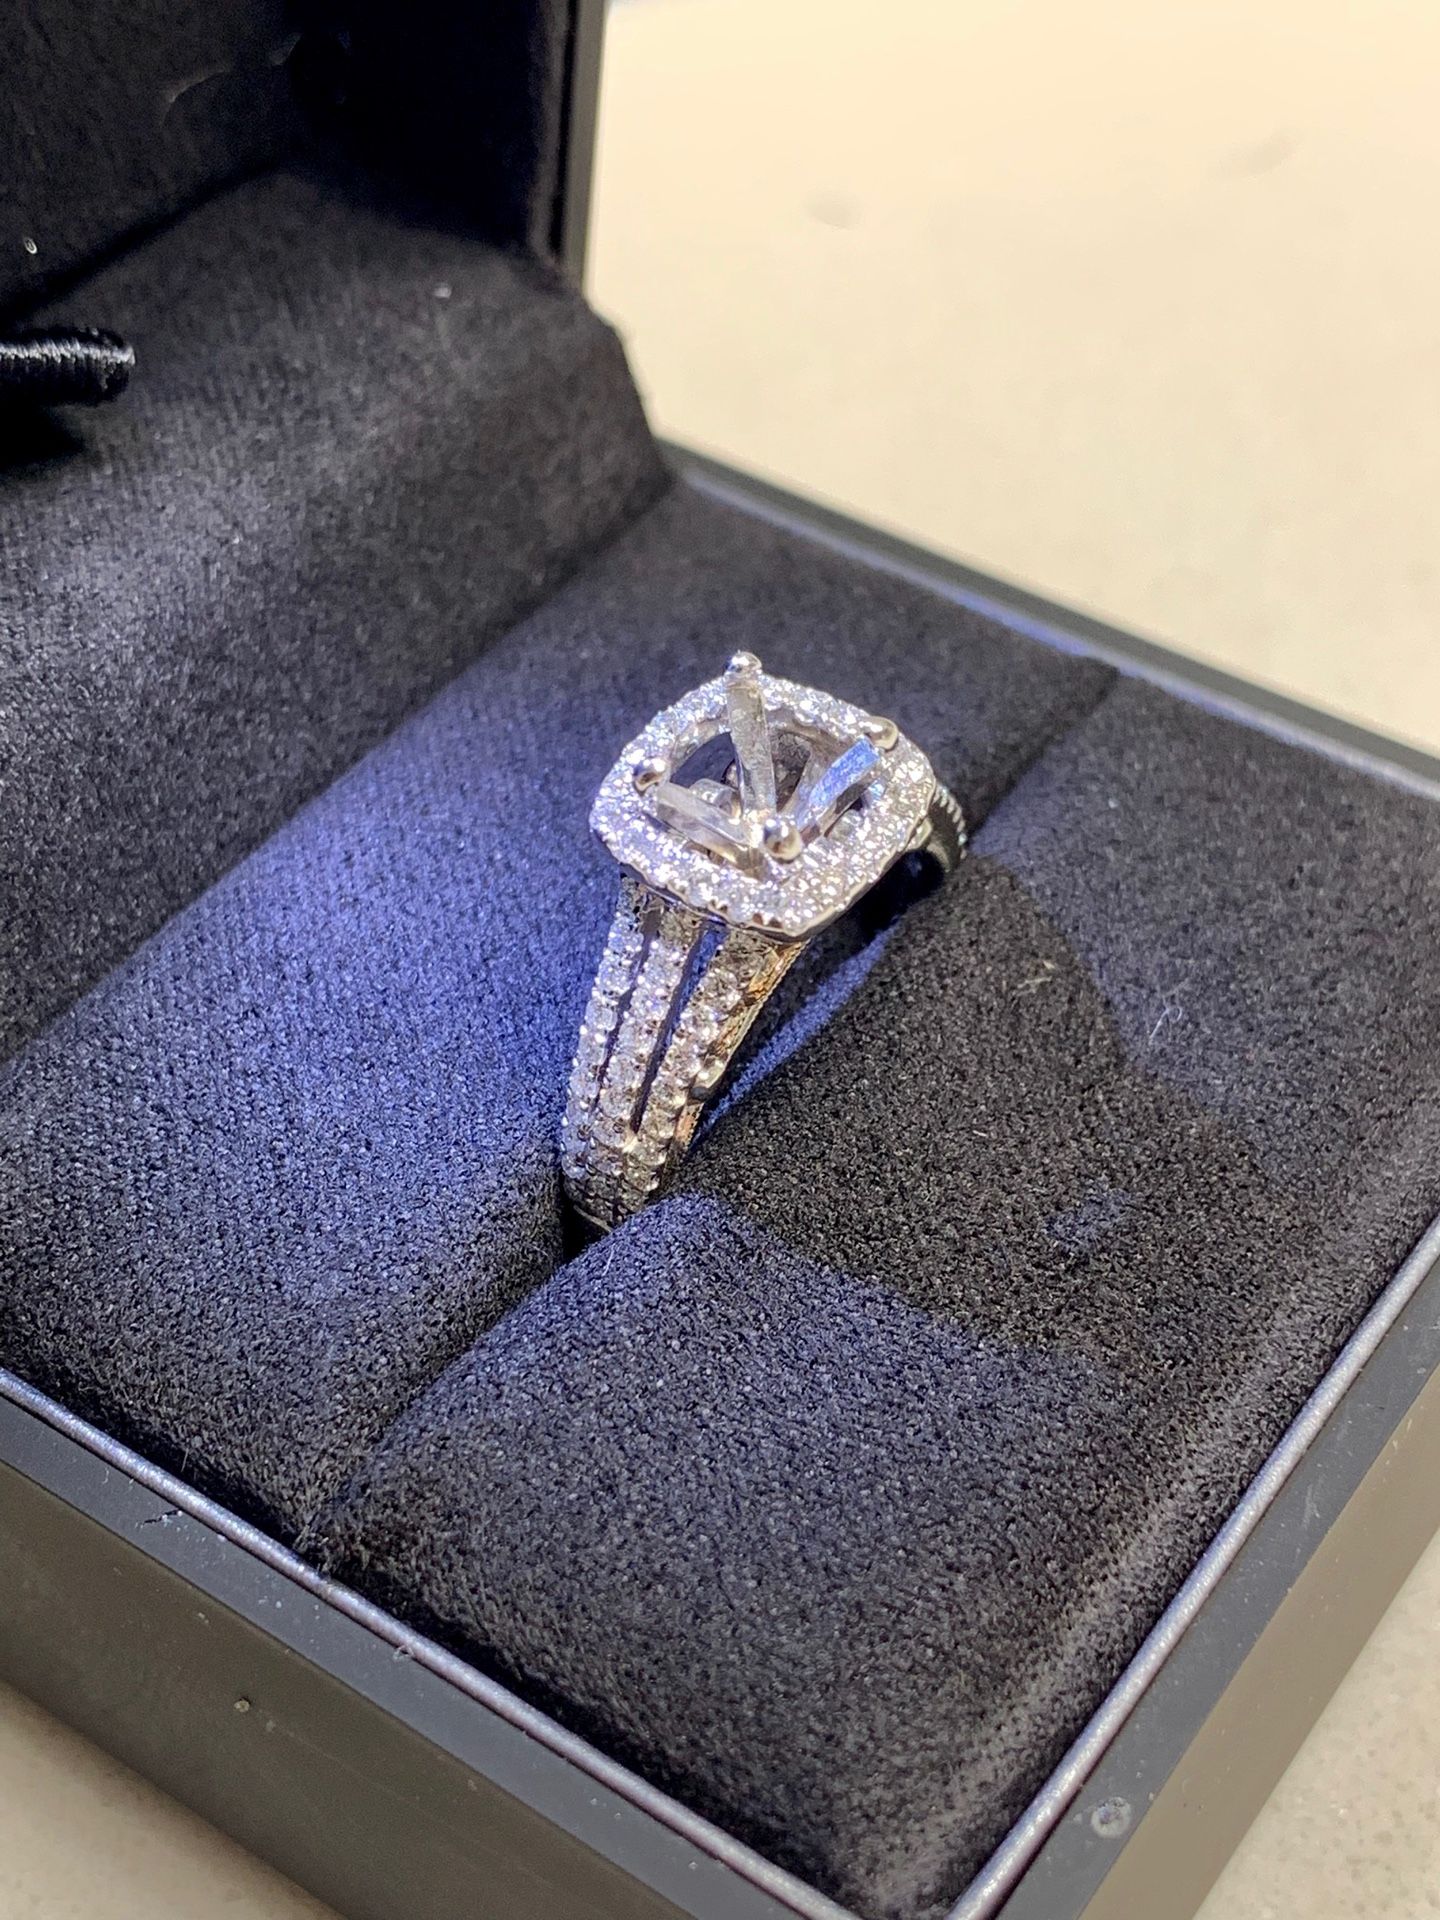 Peter Lam luxury royal tiara White and rose gold engagement ring setting